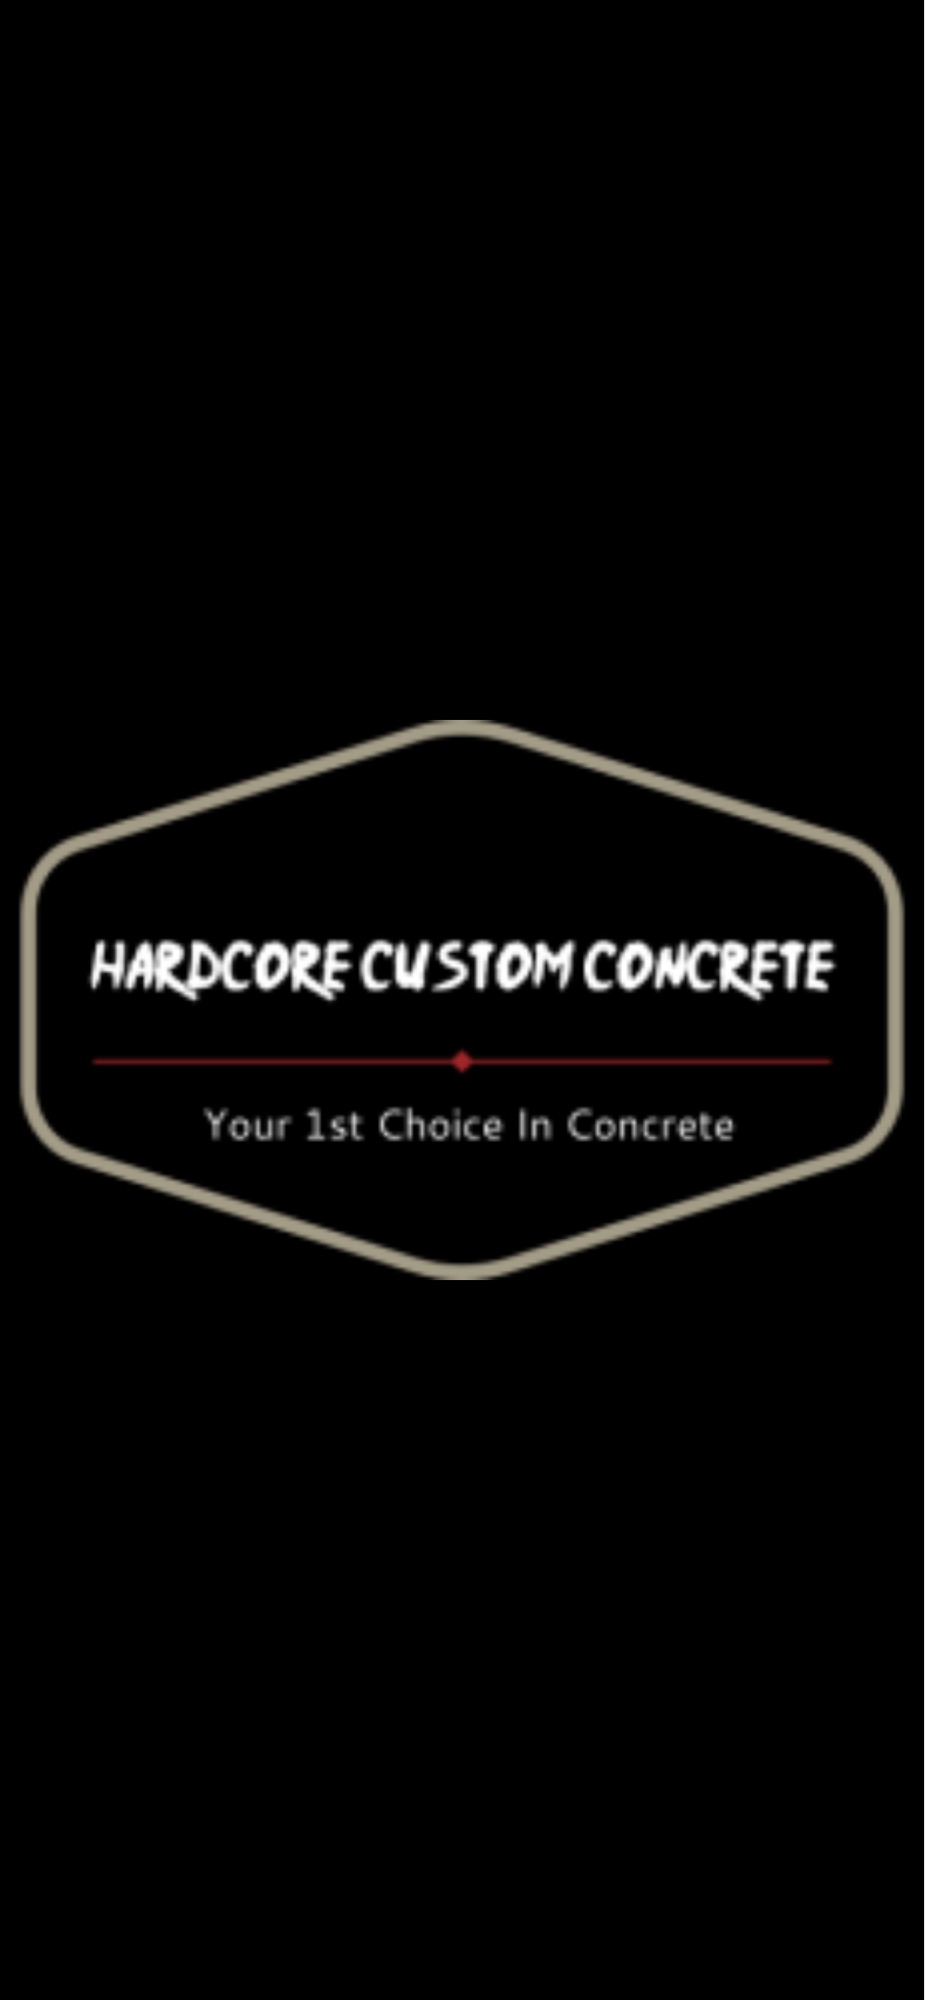 Hardcore Custom Concrete - Home  Facebook Logo